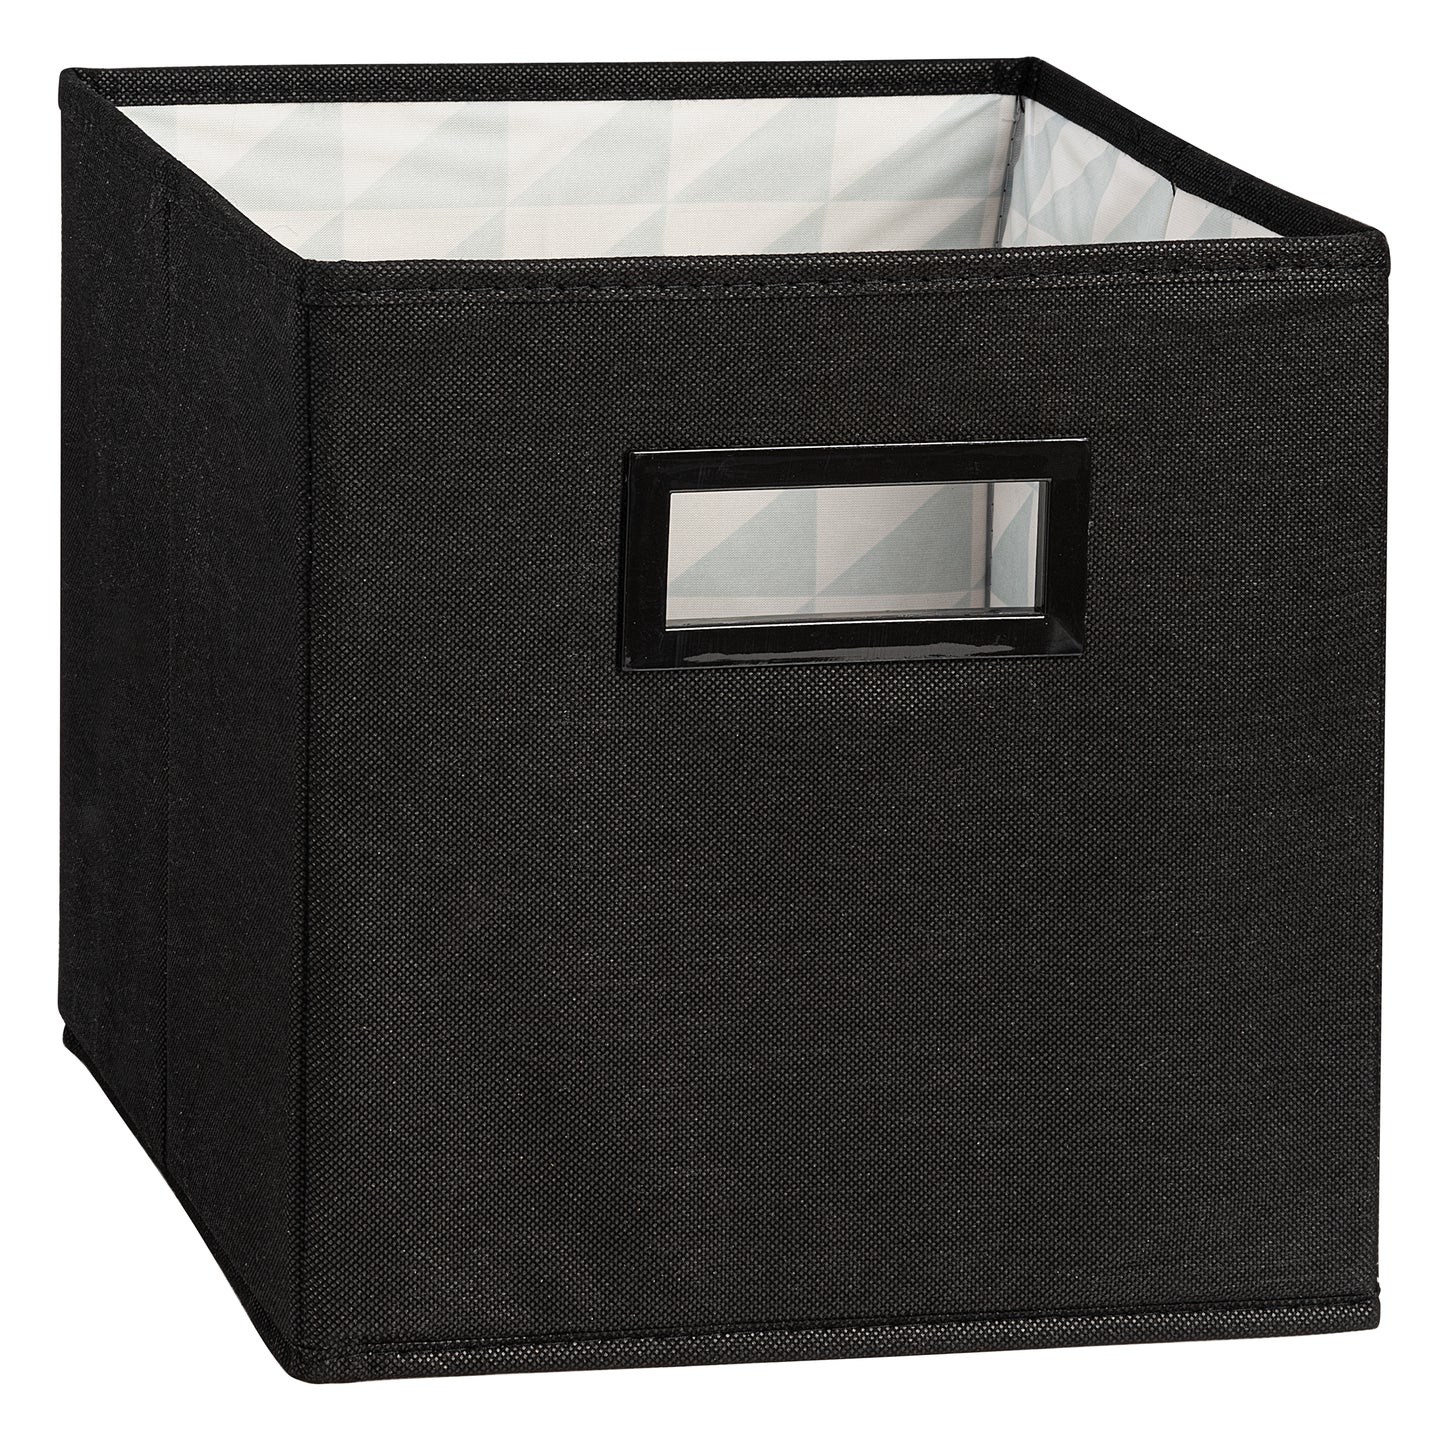 Fabric Storage Organizer 11" Bin, Black Cube